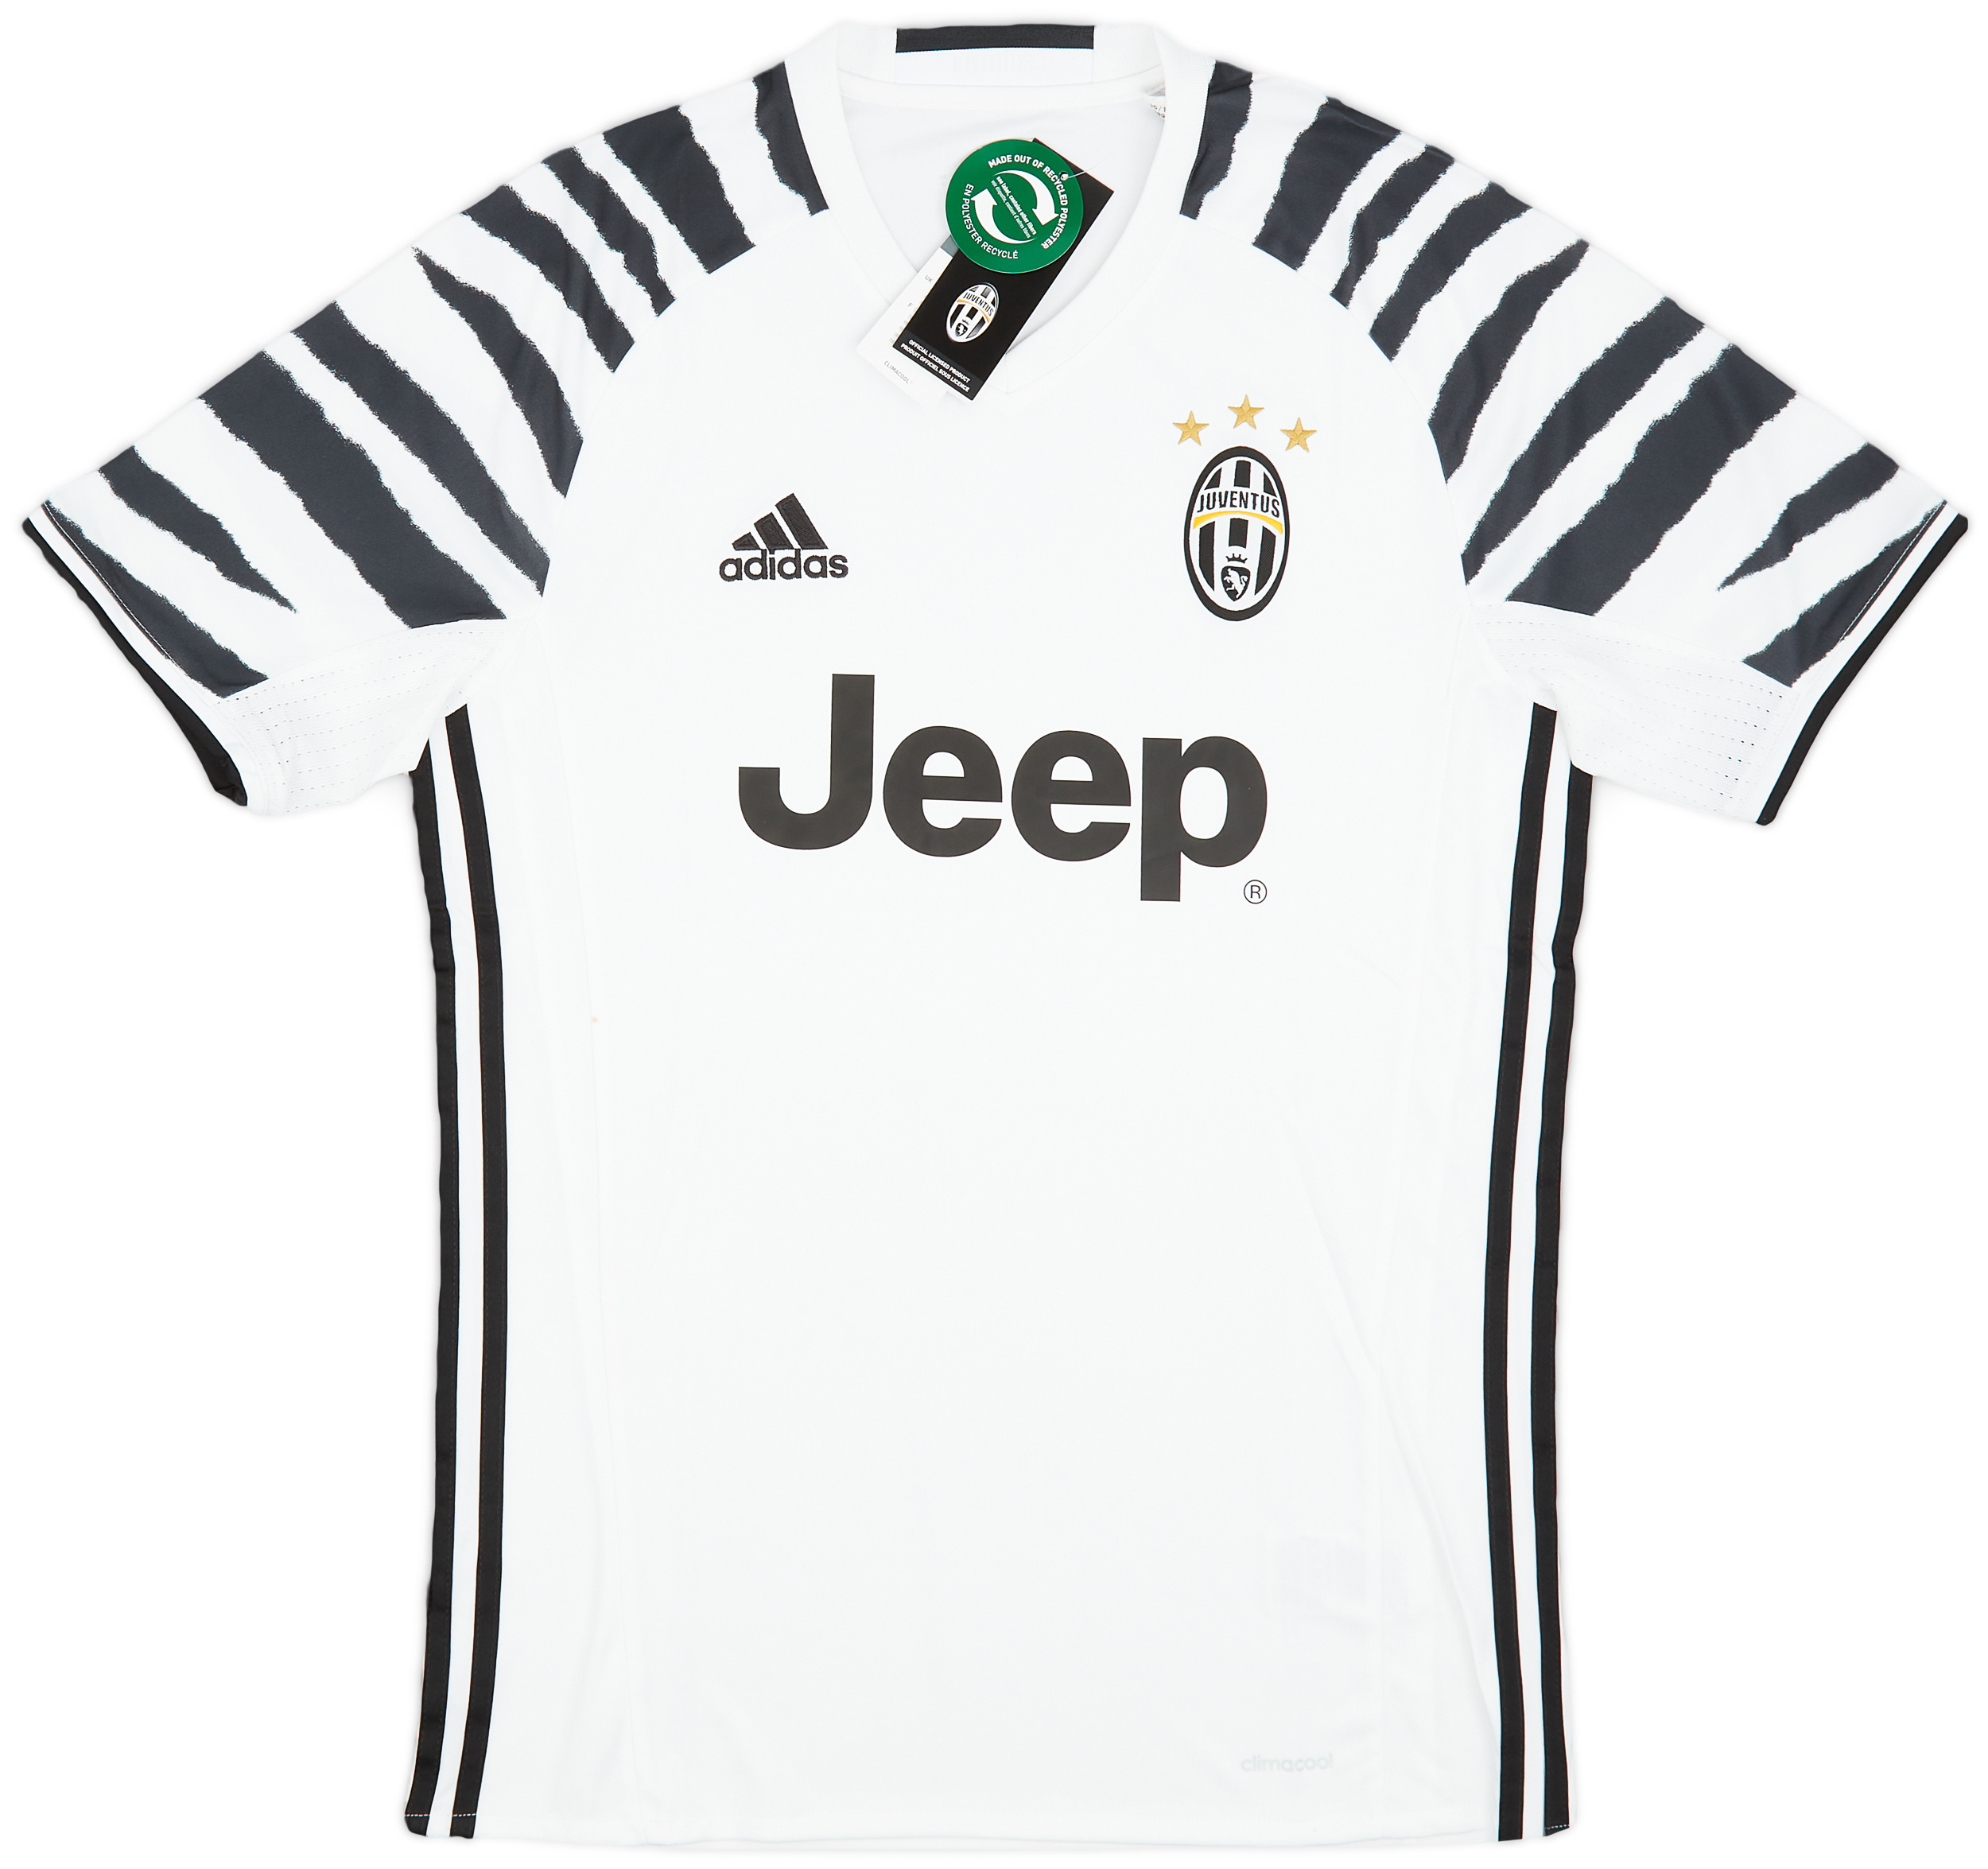 Juventus  Третья футболка (Original)